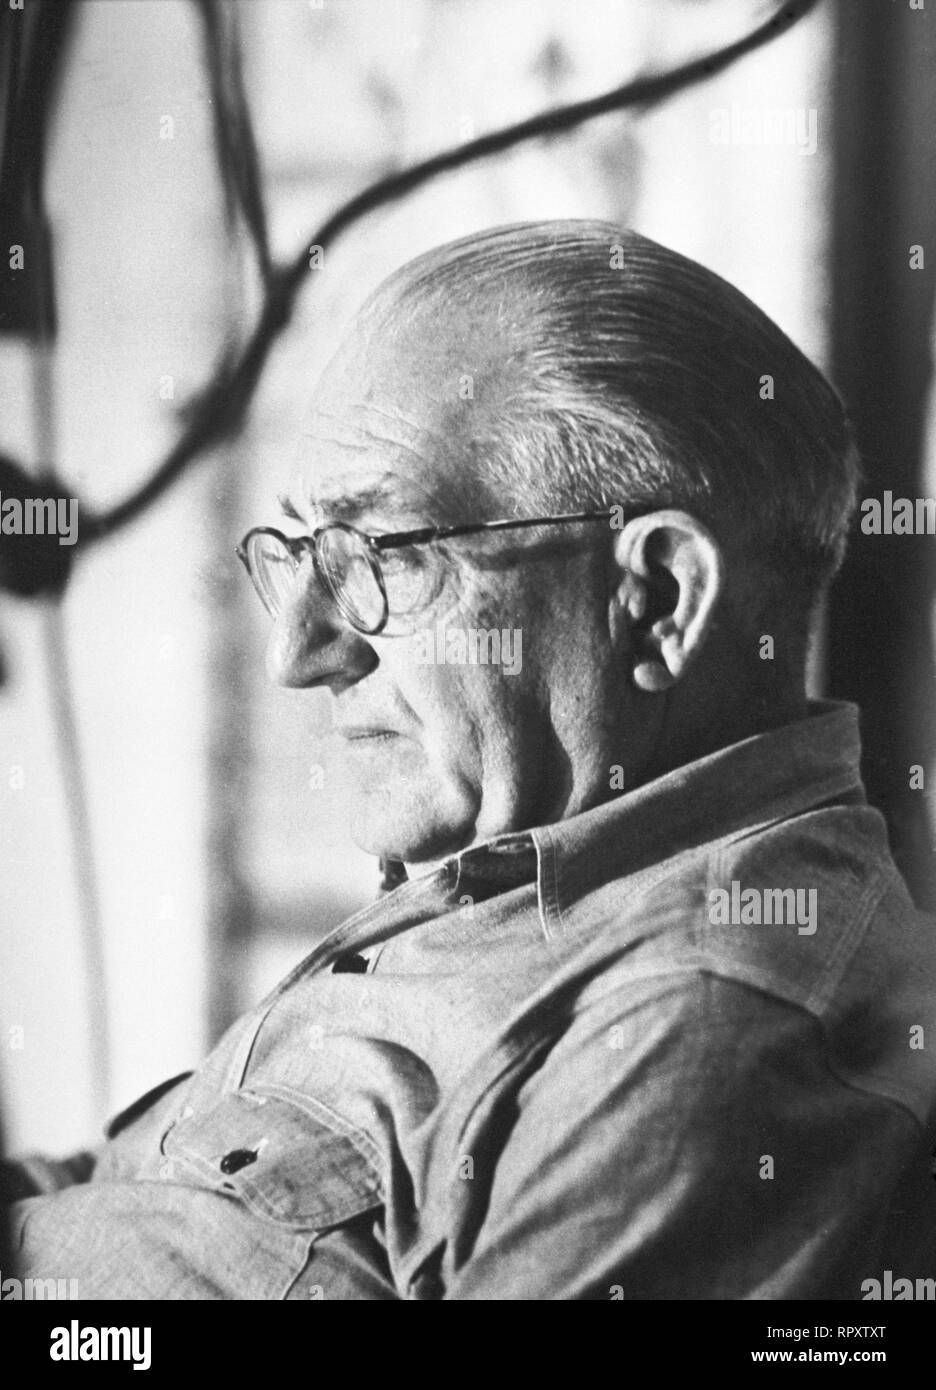 Réalisateur Fritz Lang während der Dreharbeiten Indische Grabmal zu 'Das' (1959). BH241904 kpa/Grimm Banque D'Images